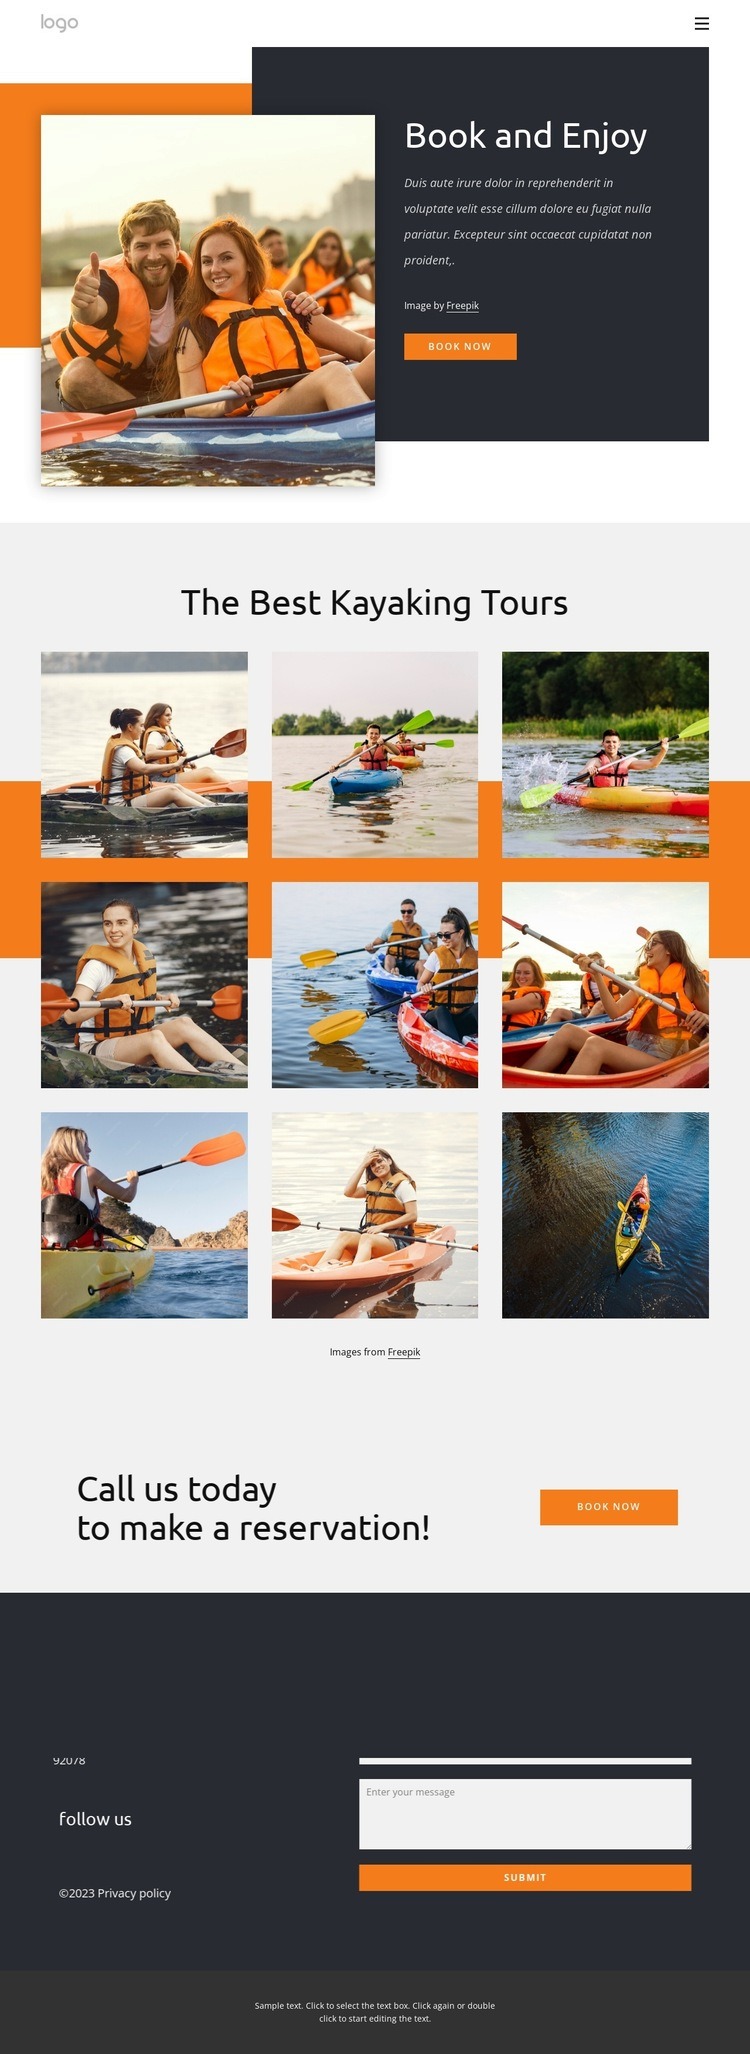 Kayaking tours and holidays Homepage Design